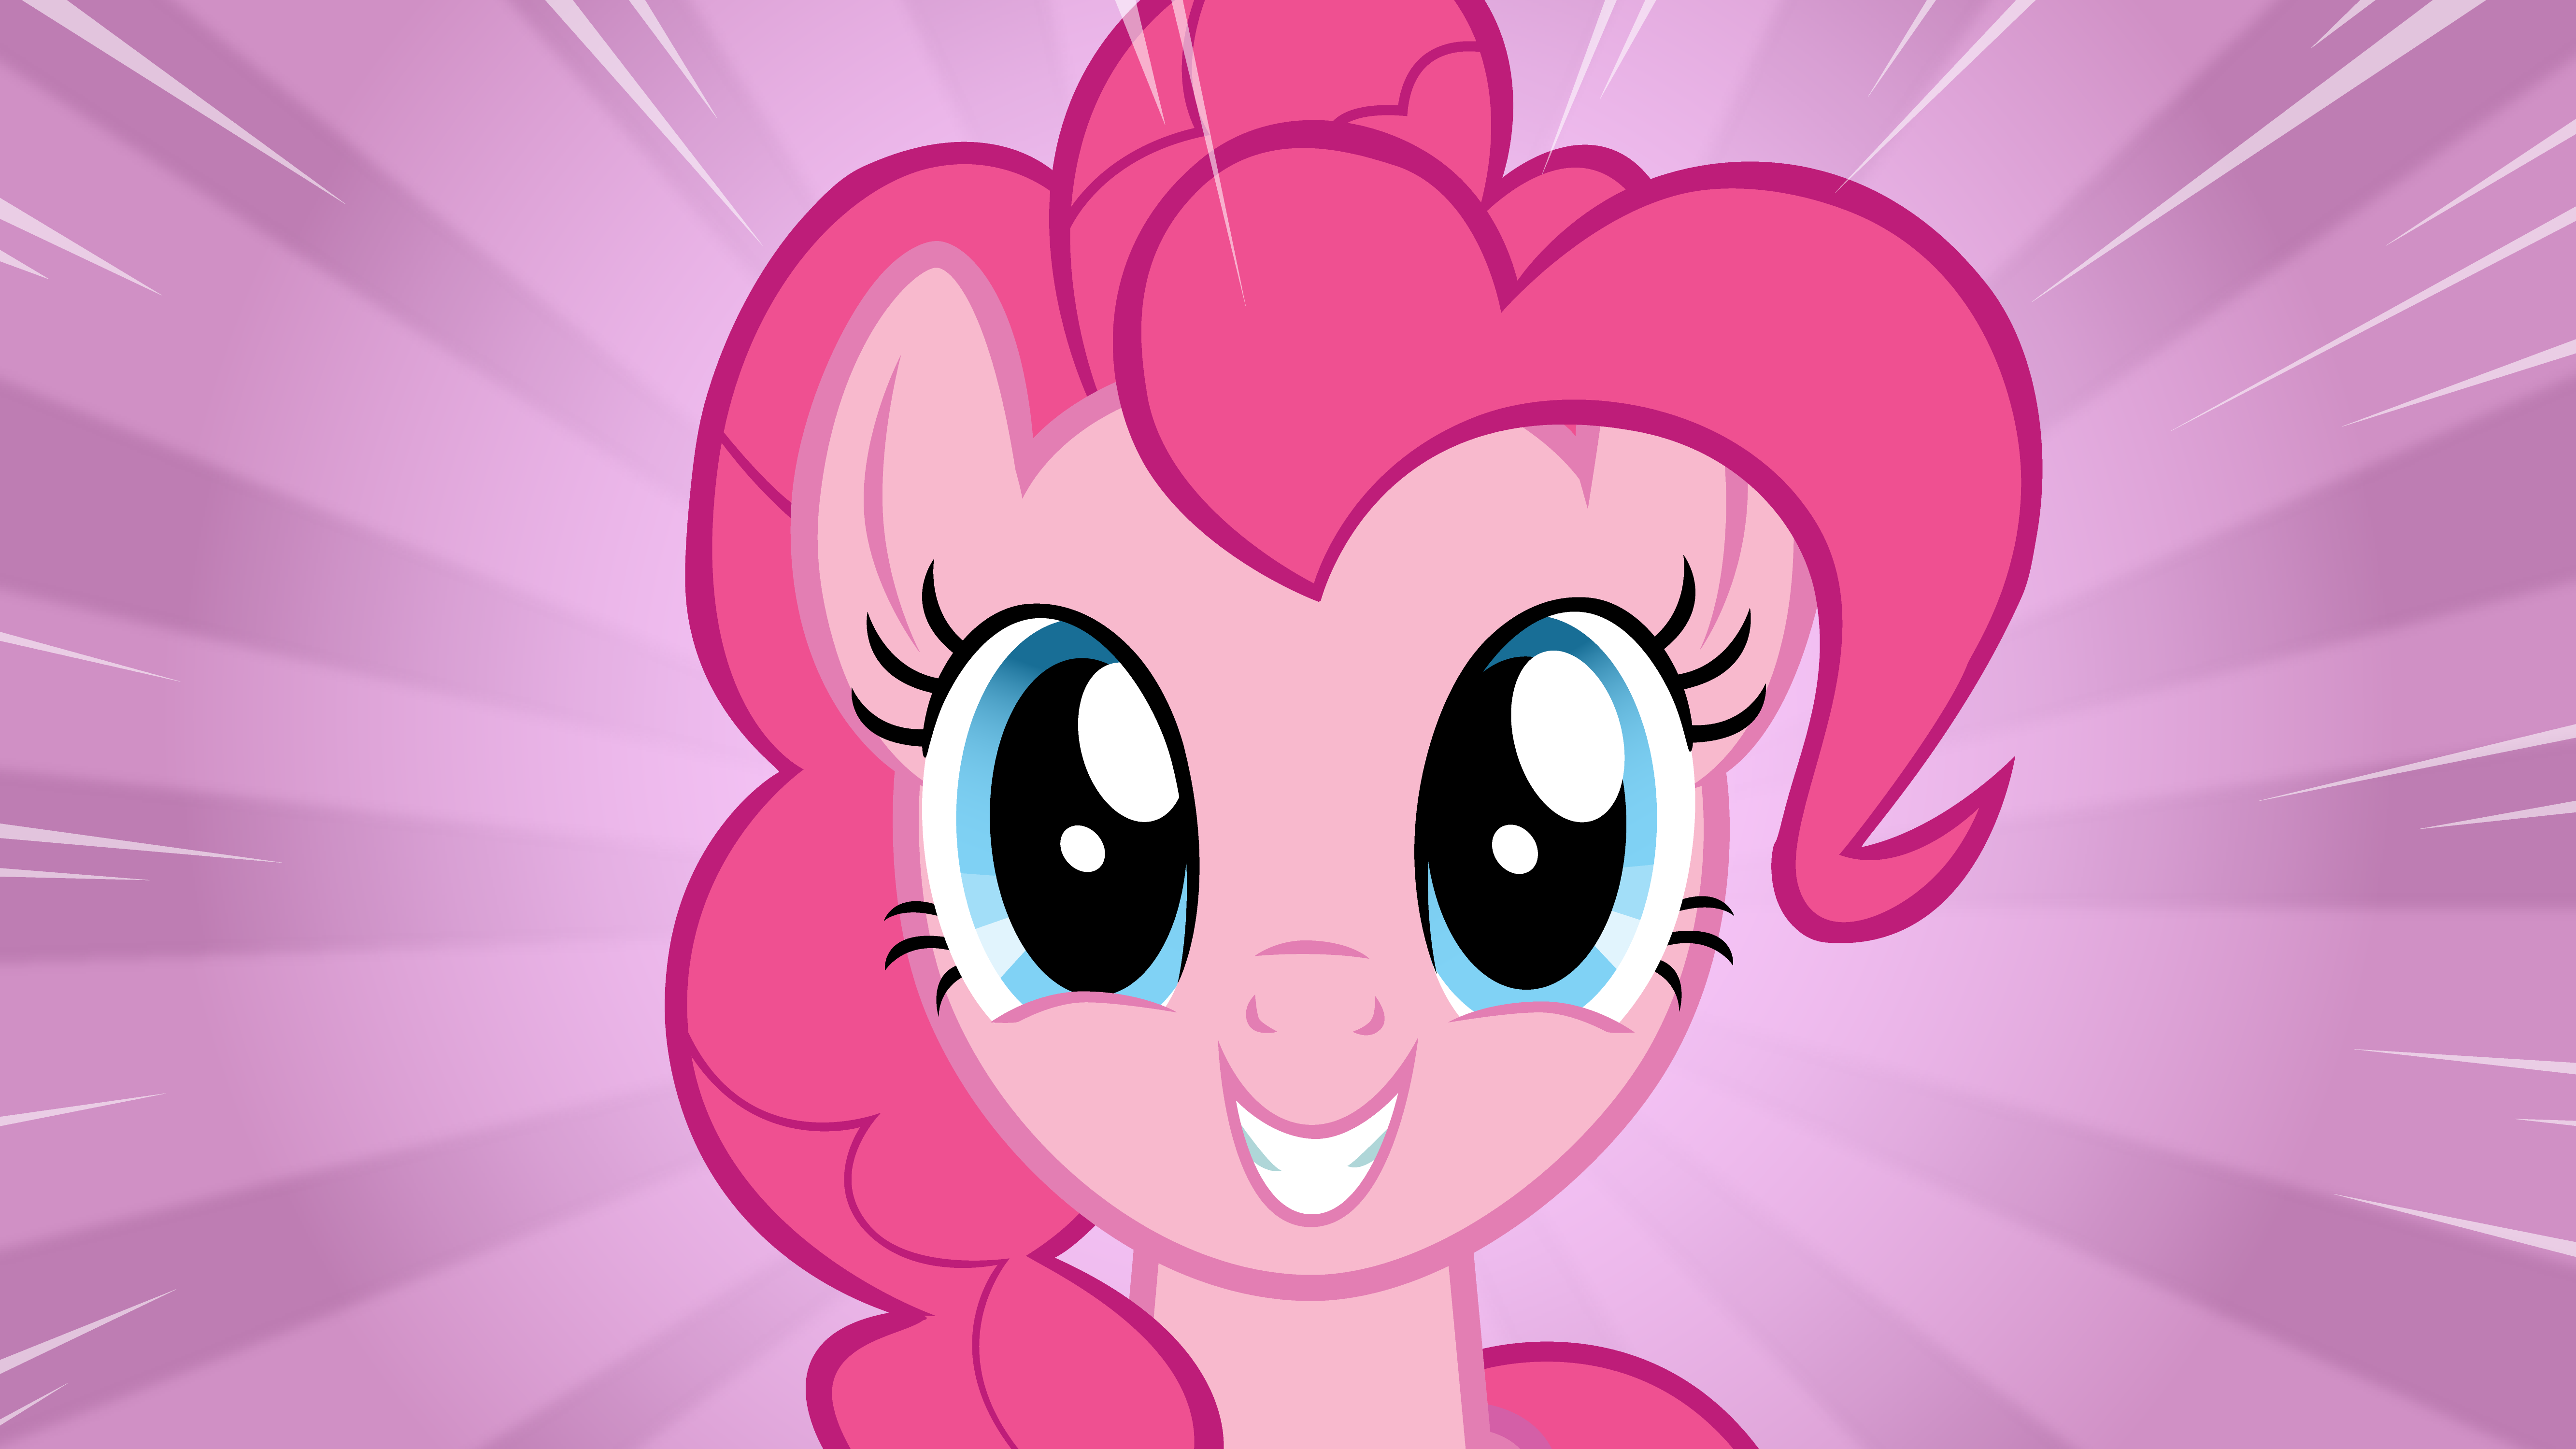 Как зовут розовую пони. Пинки Пай. My little Pony ПИНКИПАИ. Май Литлл понт ринкипай. Pony Pinkie Пинки Пай.